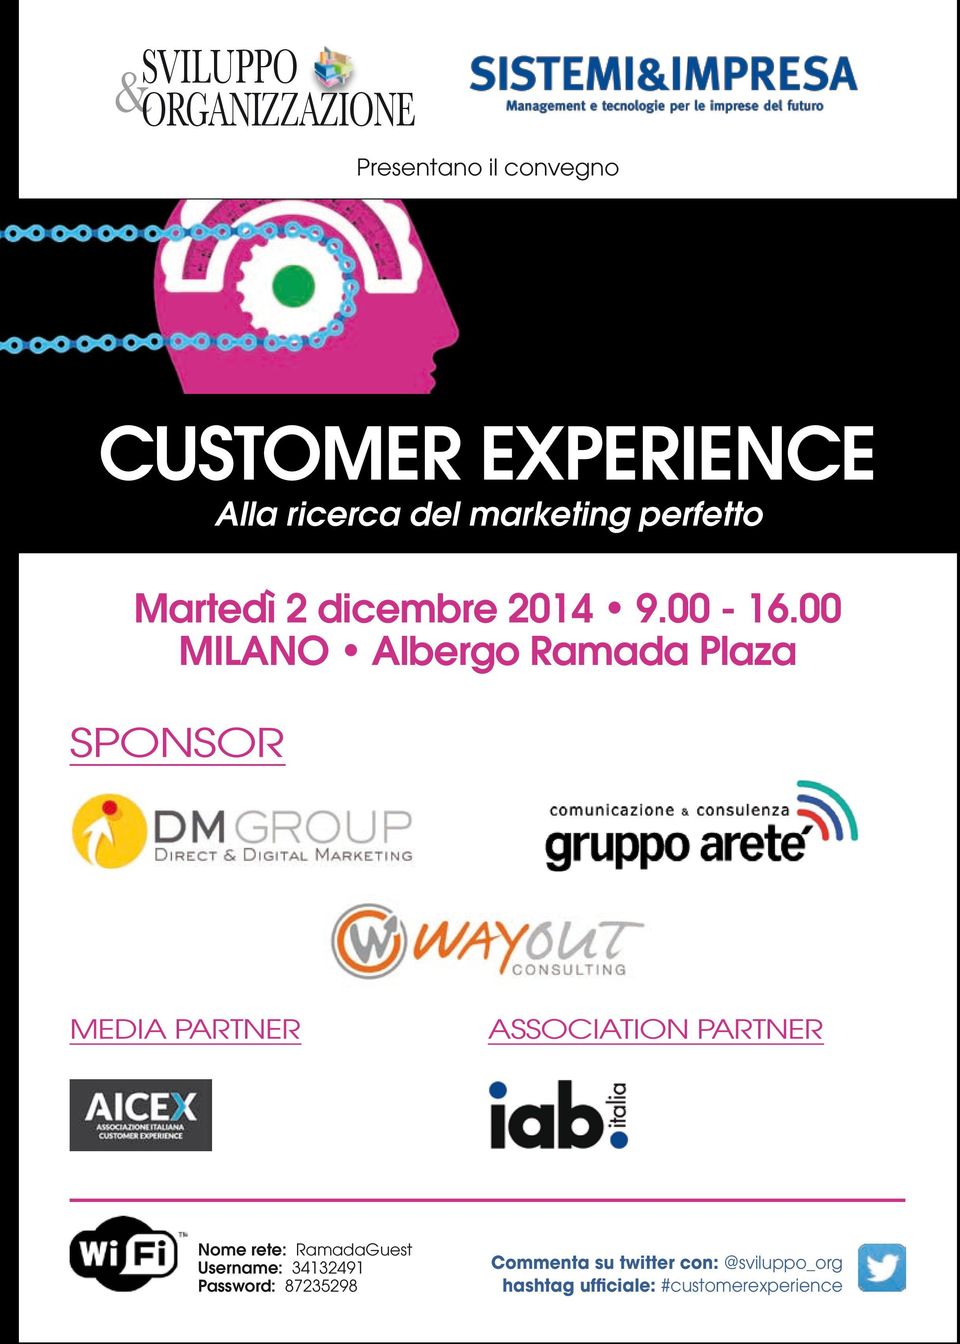 00 Milano Albergo Ramada Plaza Sponsor Media partner association partner Nome rete: